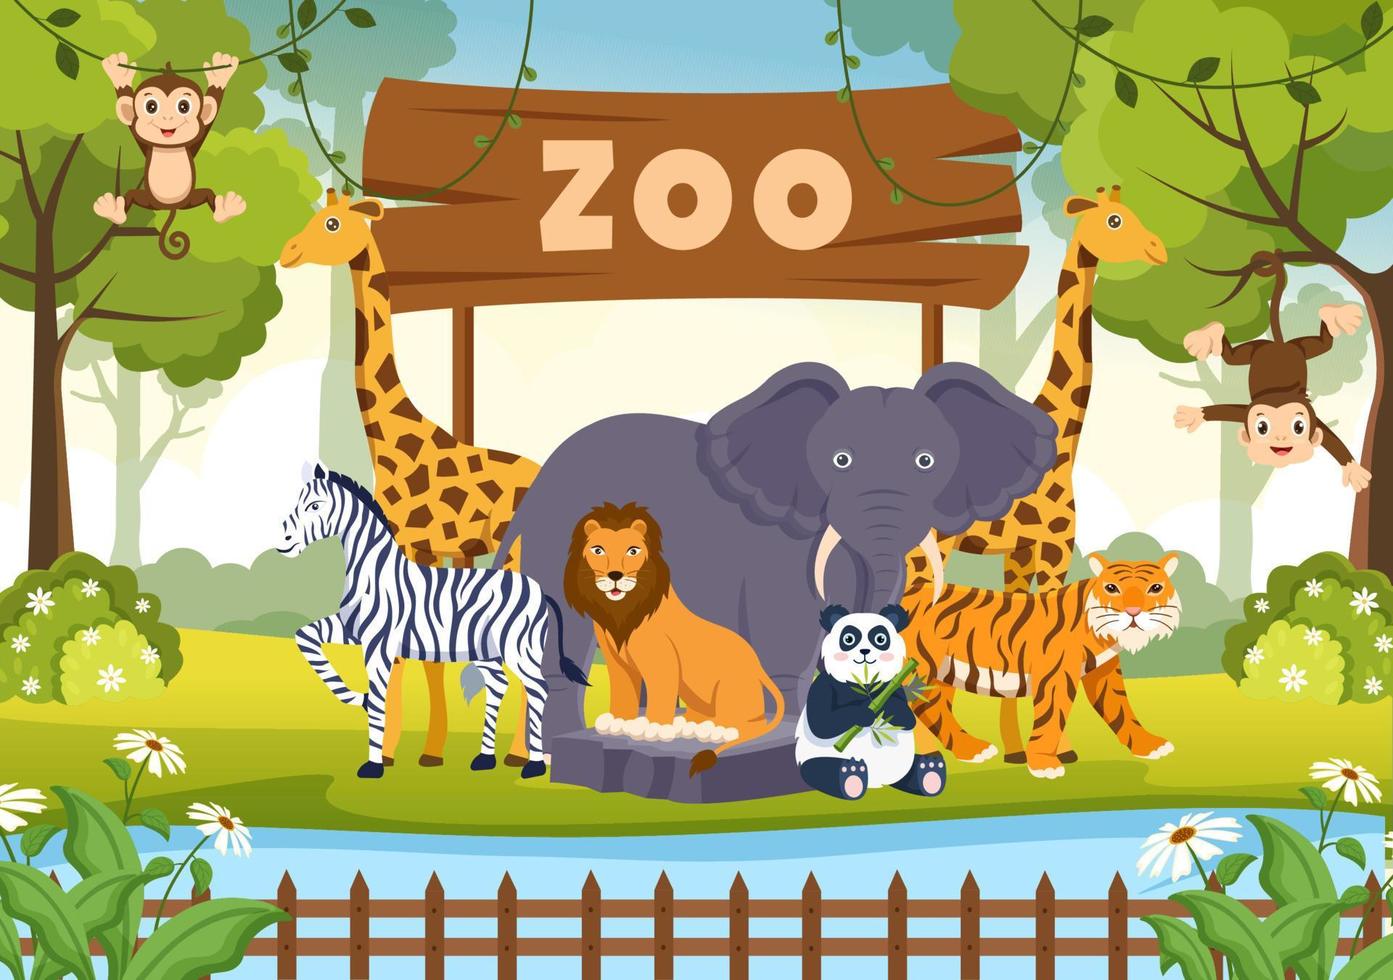 zoo tecknad illustration med safaridjur elefant, giraff, lejon, apa, panda, zebra och besökare på territorium på skogsbakgrund vektor